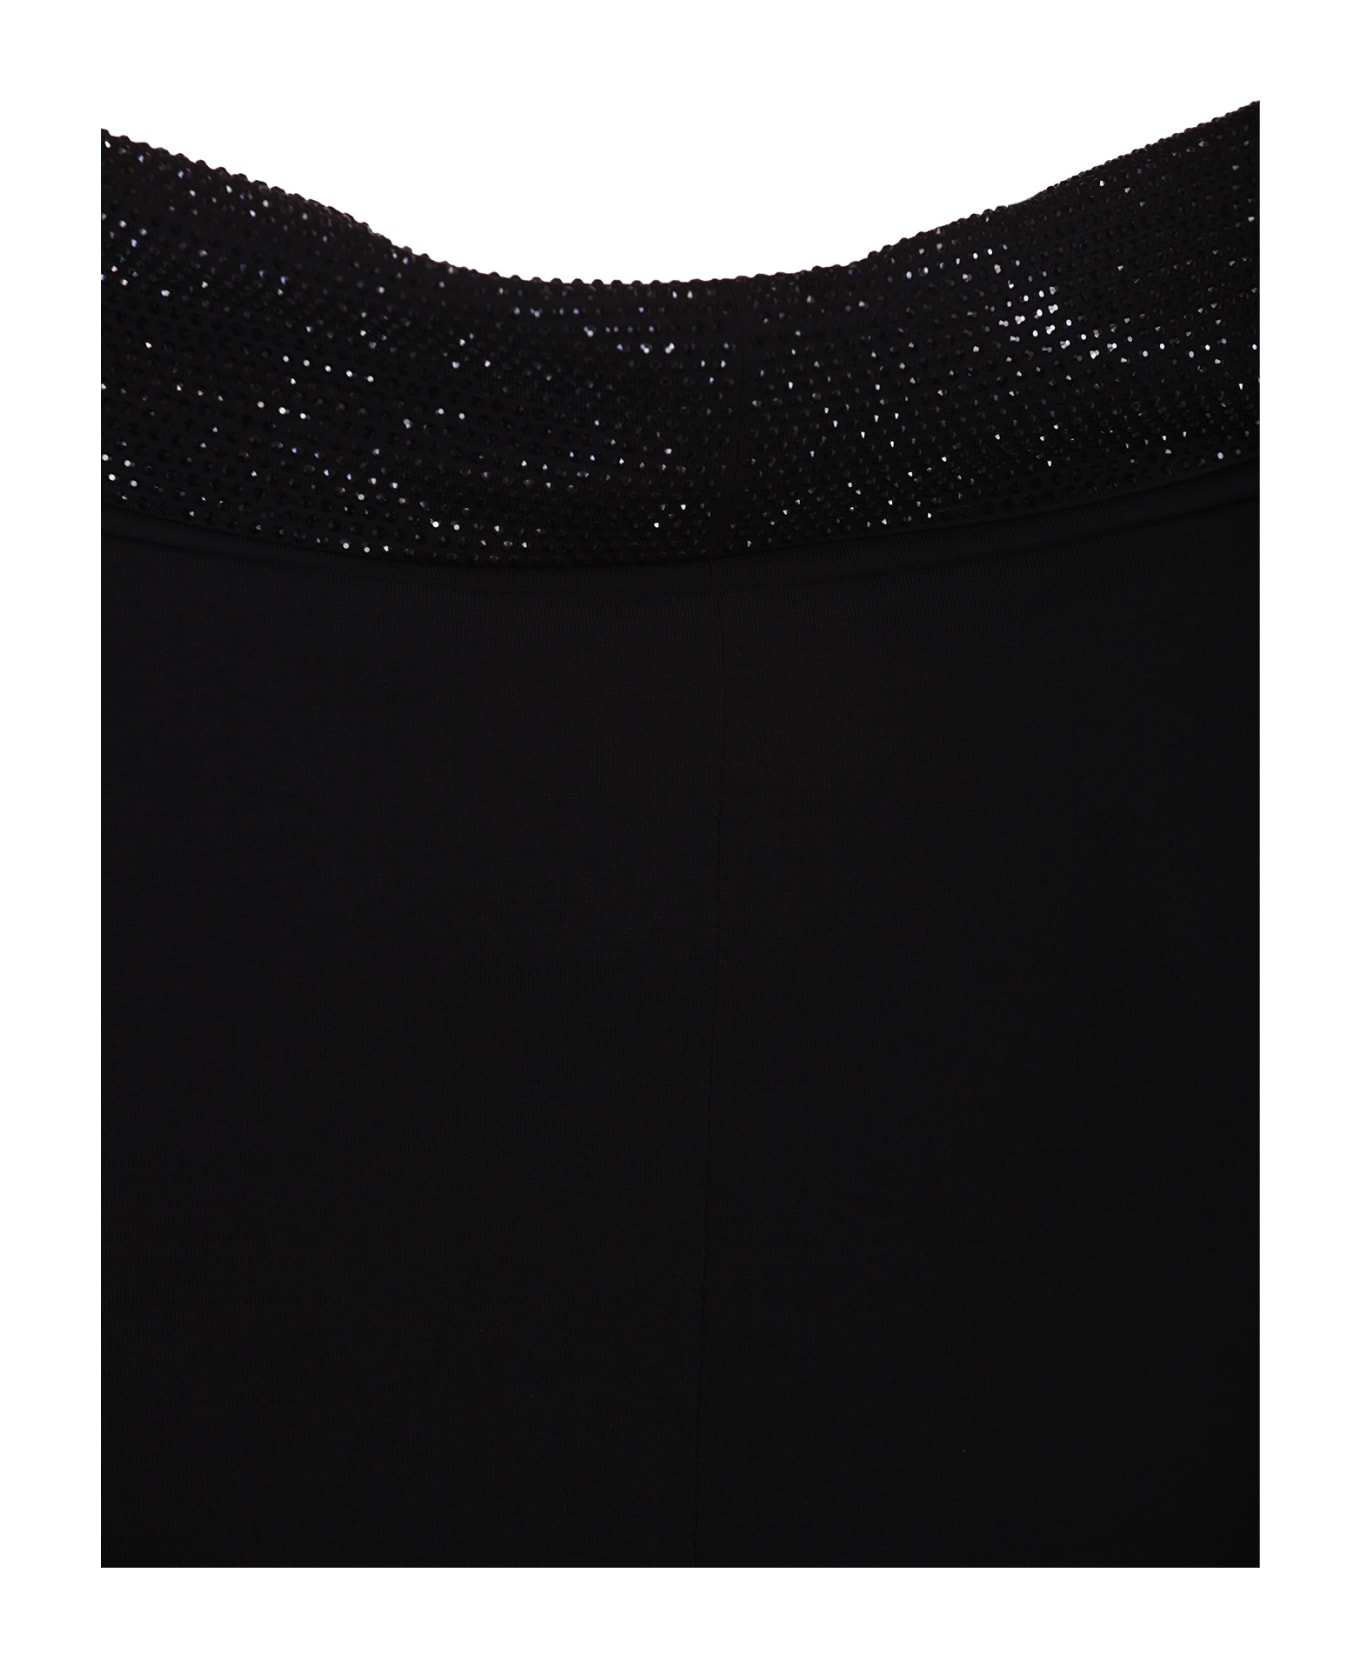 Emporio Armani Dresses Black - Black